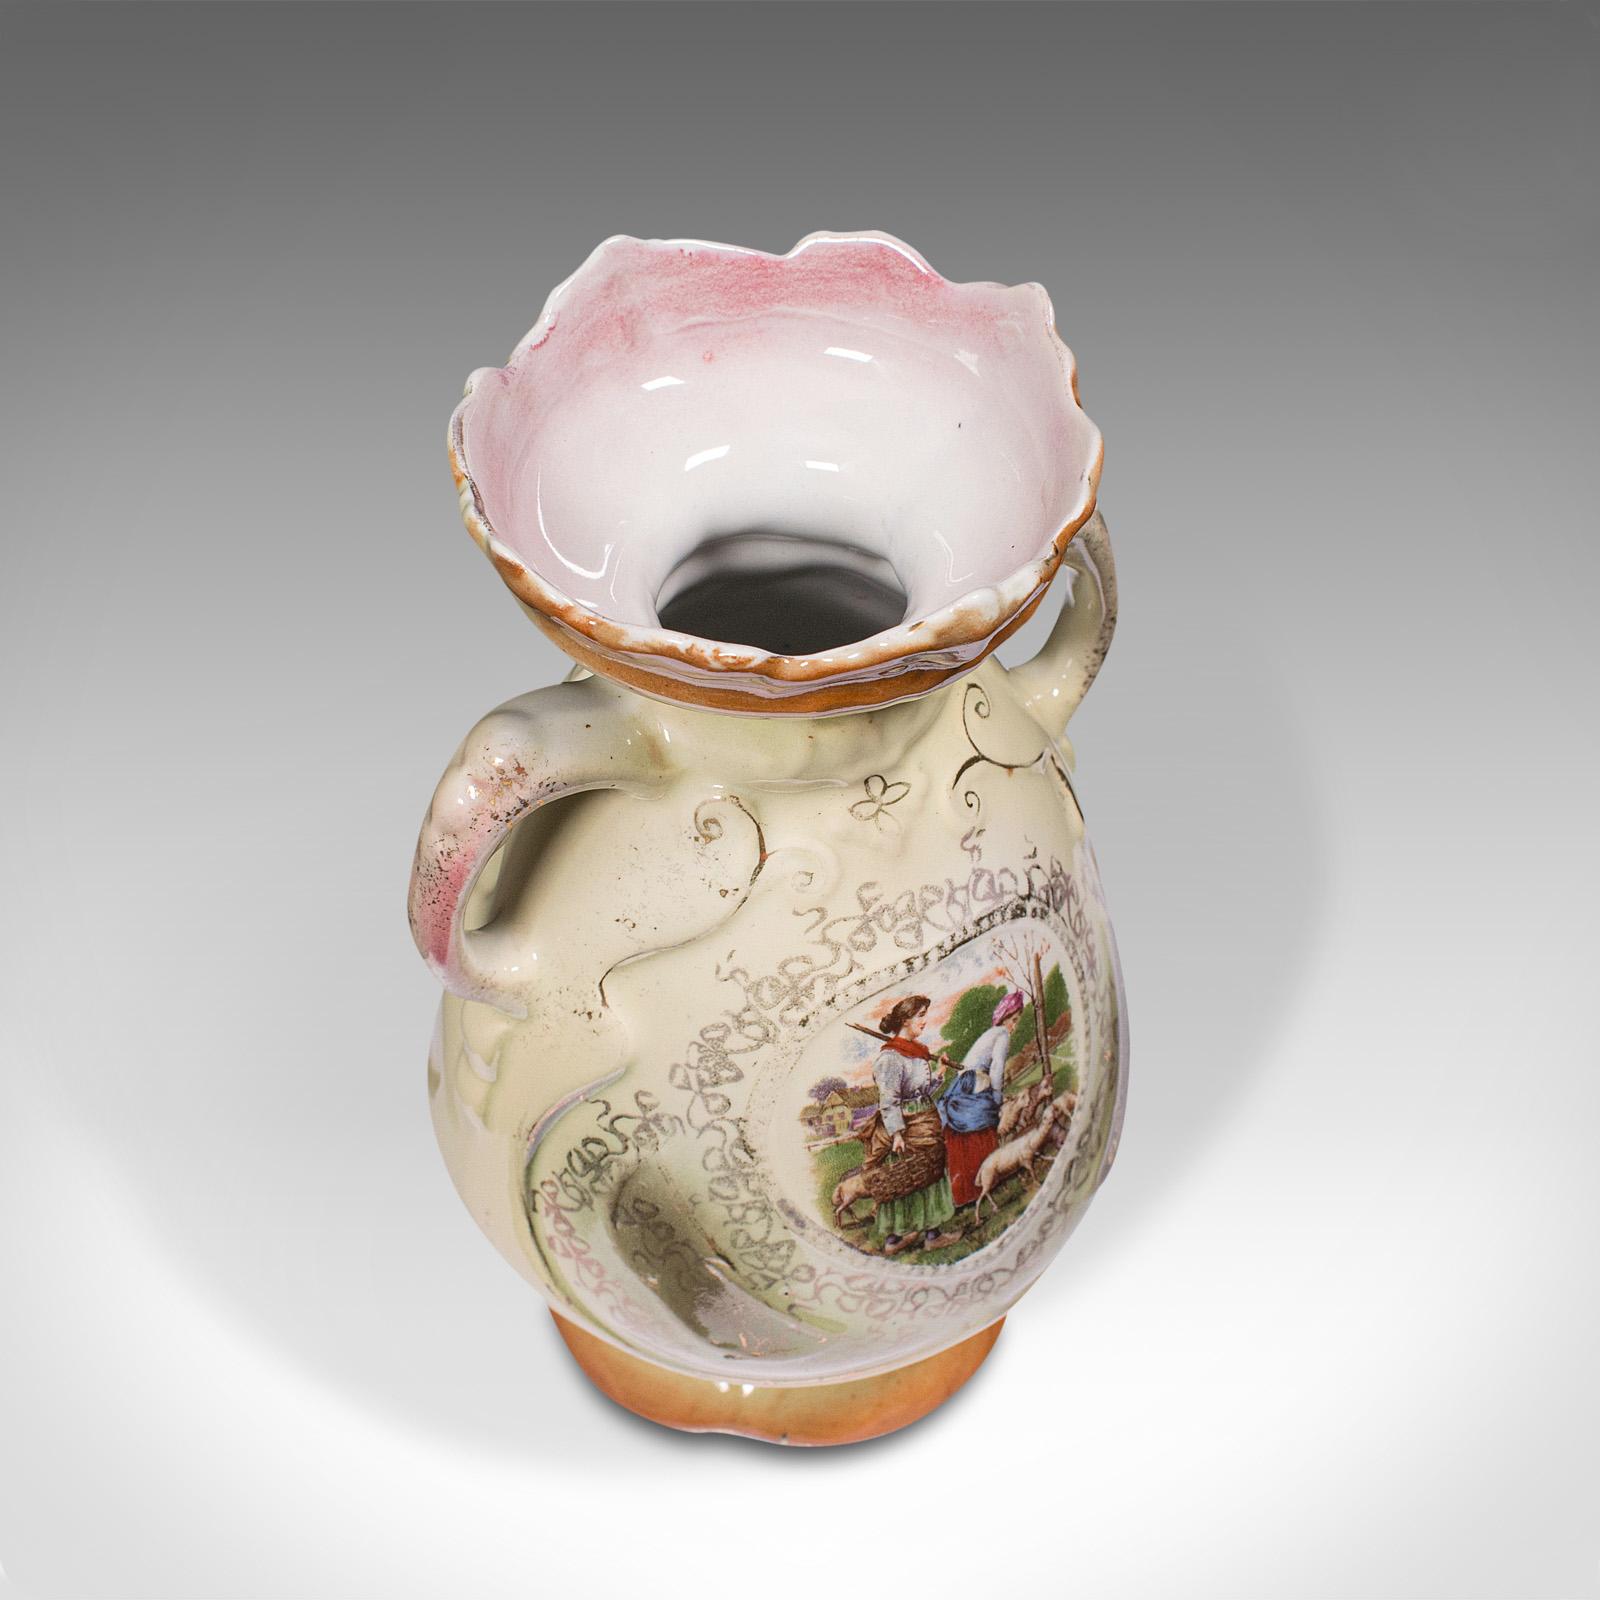 Small Vintage Display Vase, English, Ceramic, Decorative Baluster, circa 1930 For Sale 2